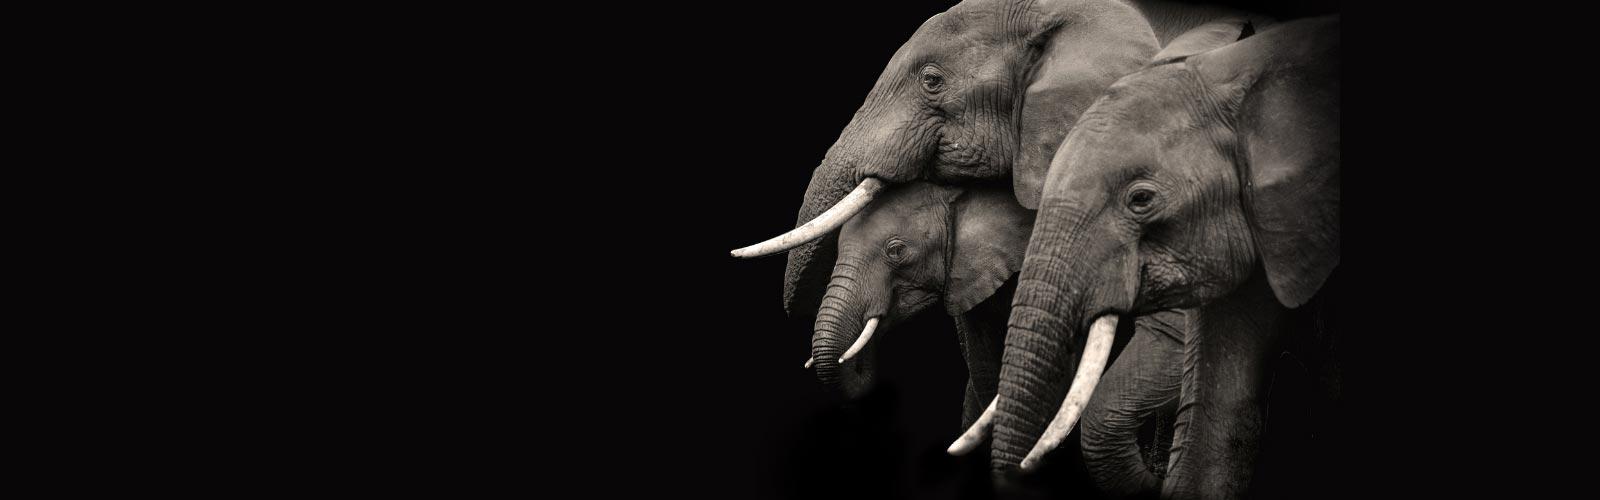 Photo of three elephants in profile